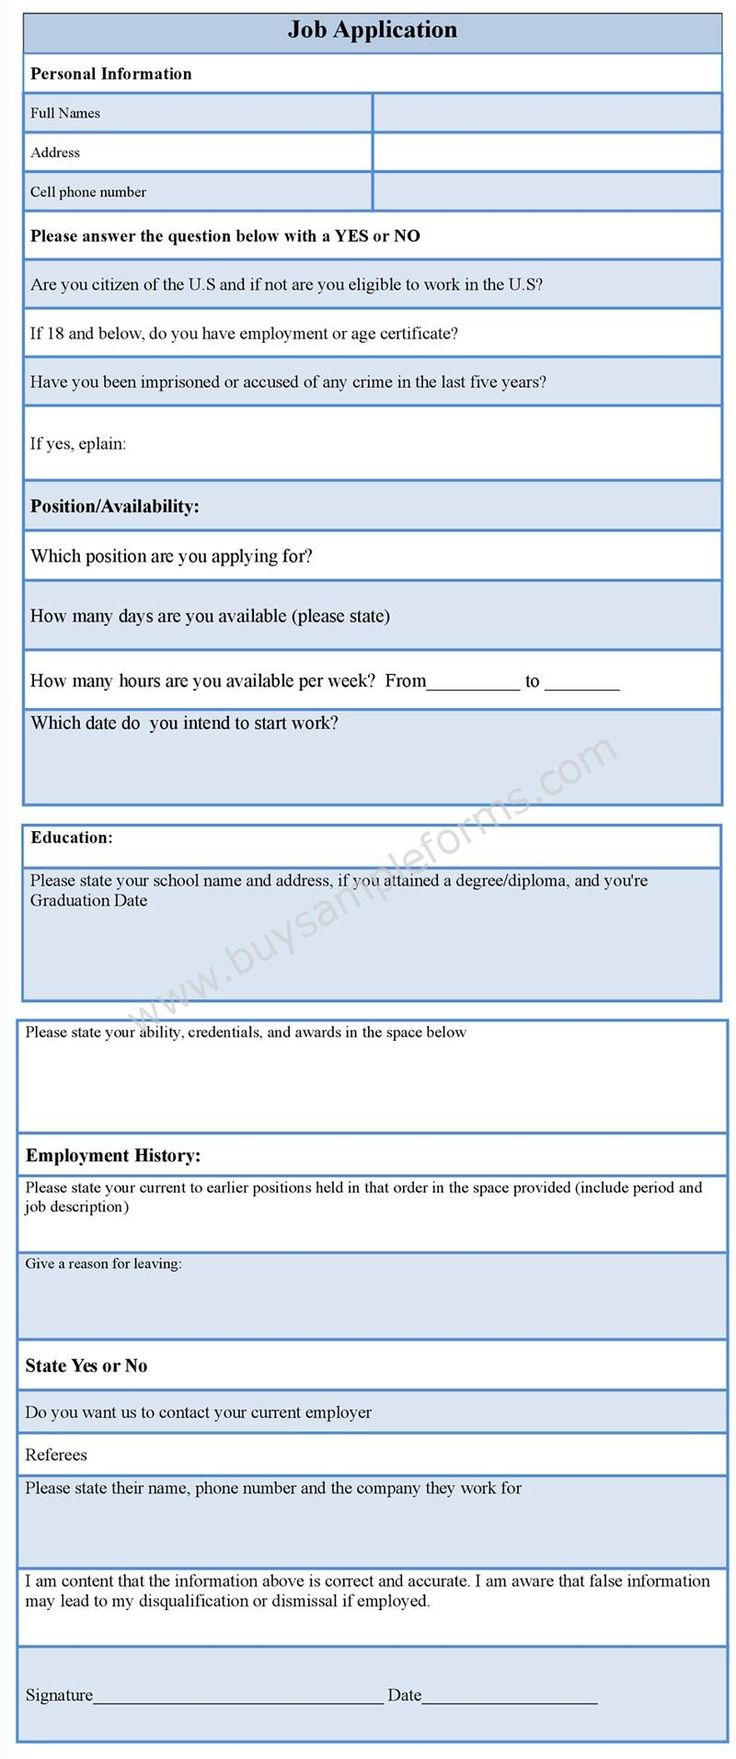 Job Seekers Application Form Online JobApplicationForms